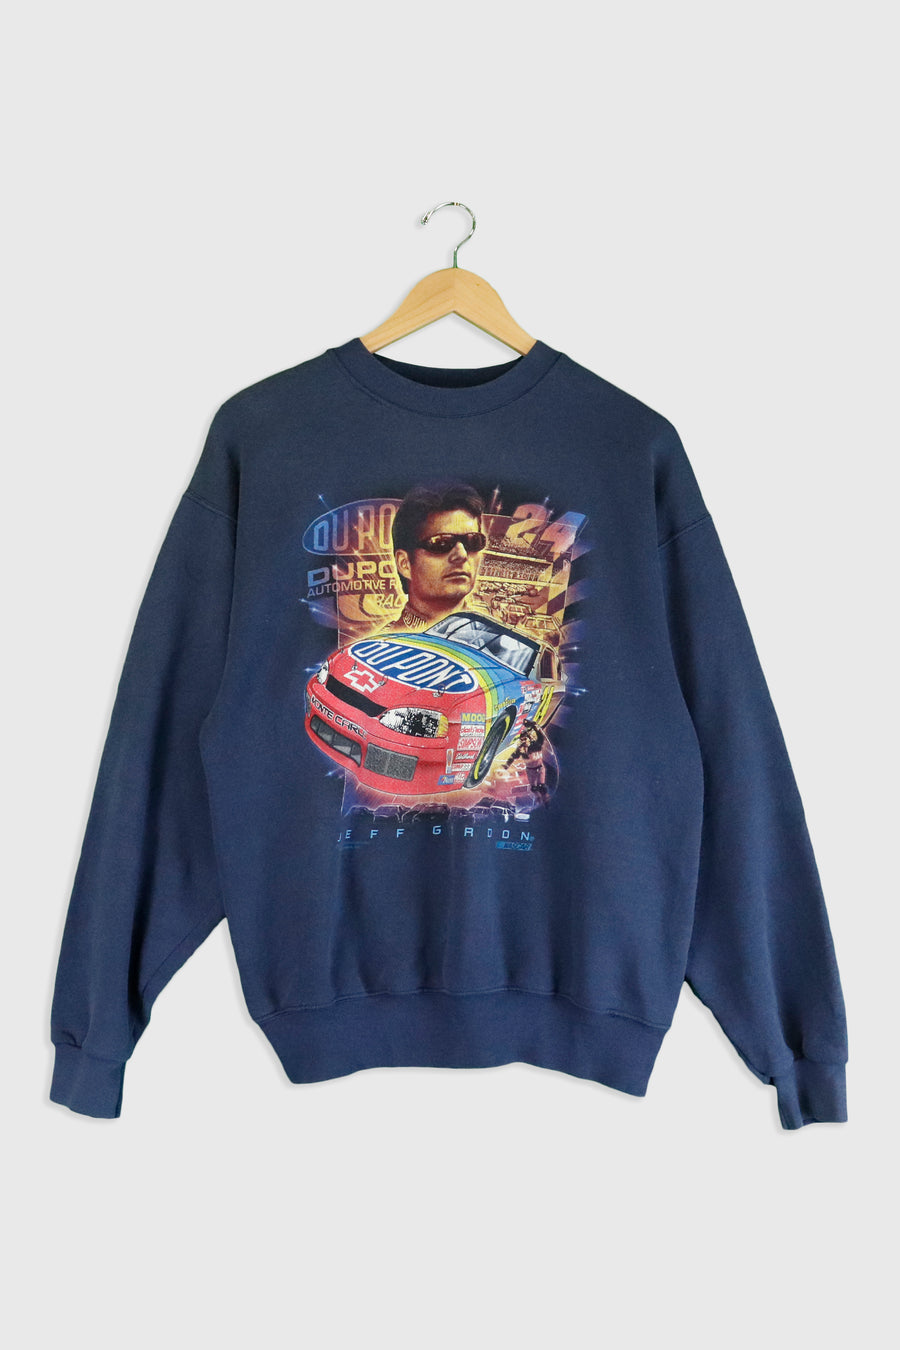 Vintage 1999 Jeff Gordon Nascar Graphic Sweatshirt Sz XL